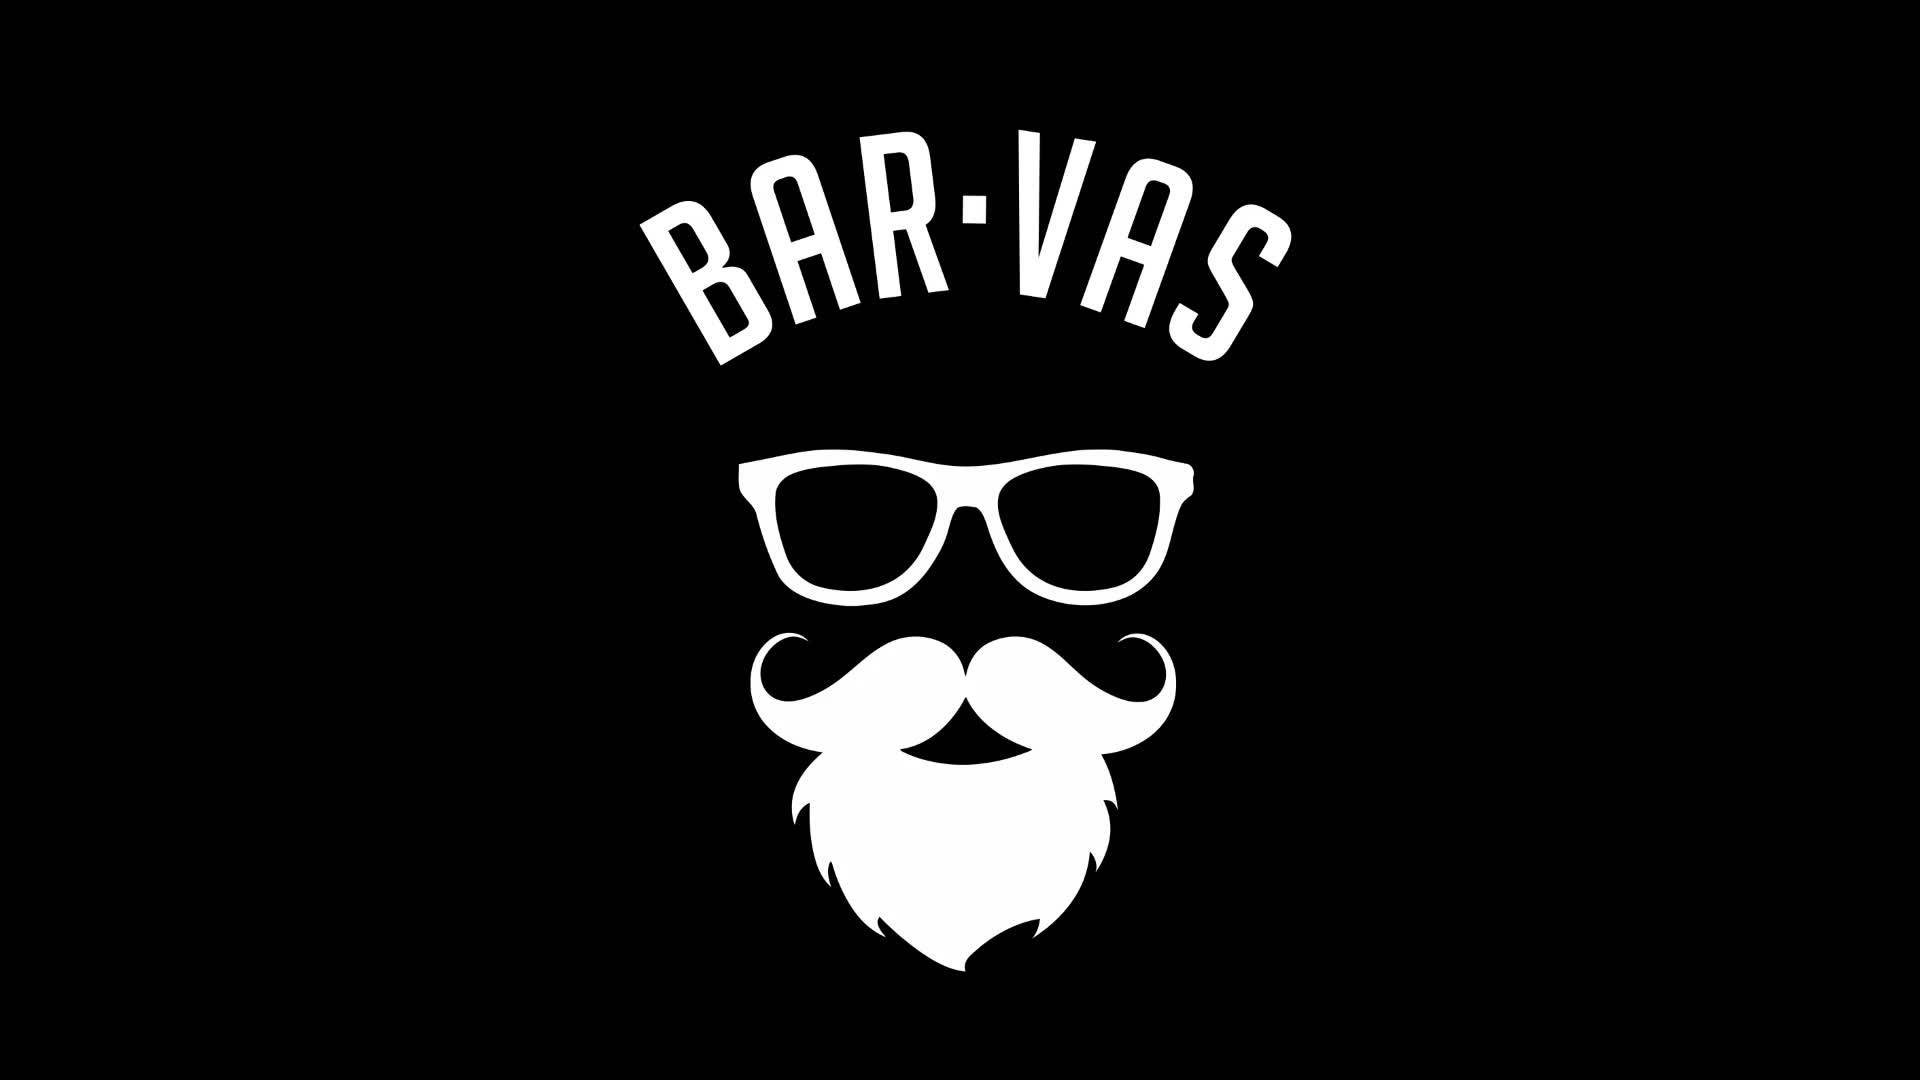 Hipster Bar Vas Beard Logo Wallpaper